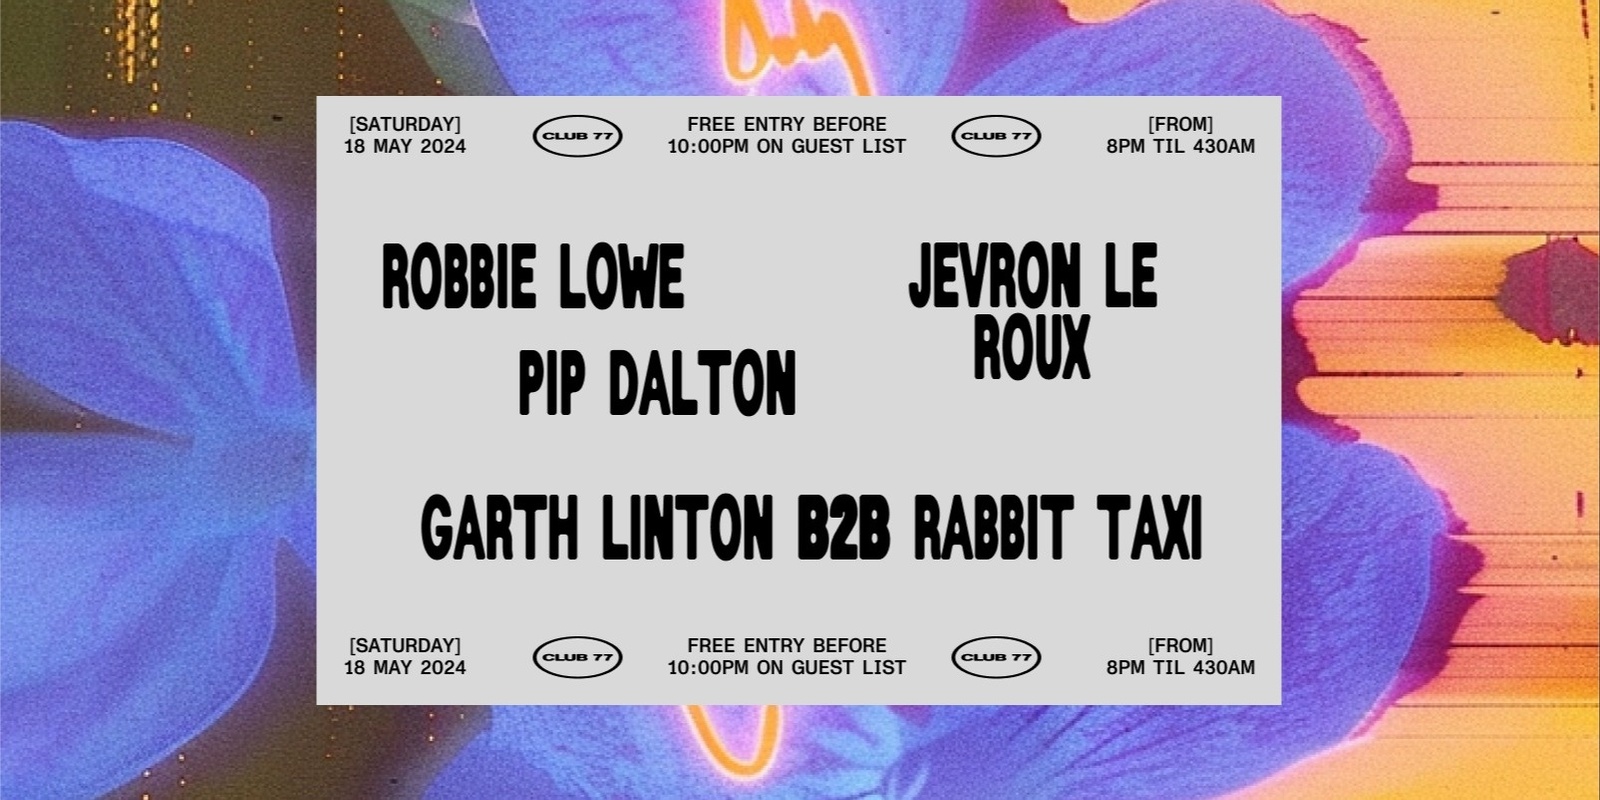 Banner image for Club 77: Robbie Lowe, Pip Dalton, Jevon Le Roux, Garth Linton b2b Rabbit Taxi